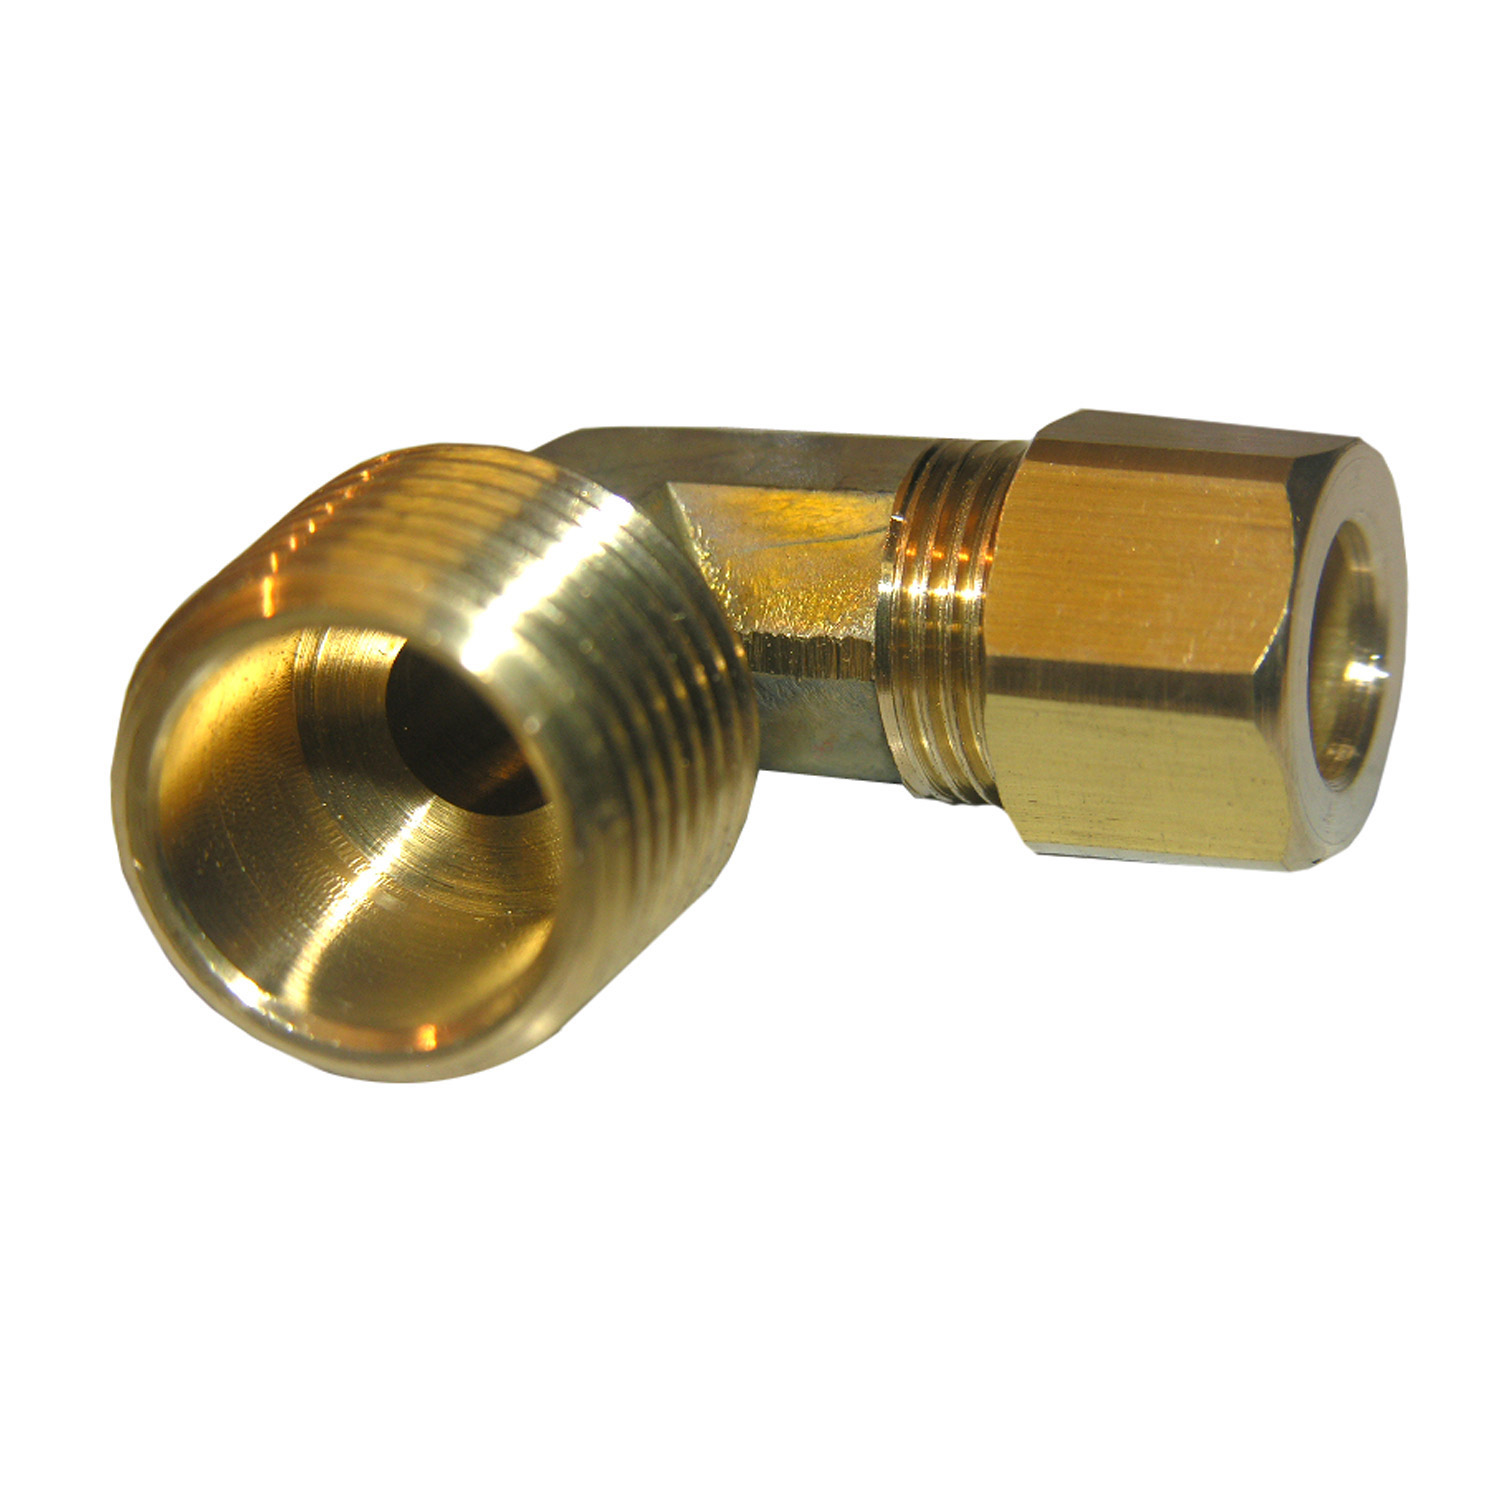 17-6931 Pipe Elbow, 3/8 in, Compression x MIP, 90 deg Angle, Brass, 150 psi Pressure